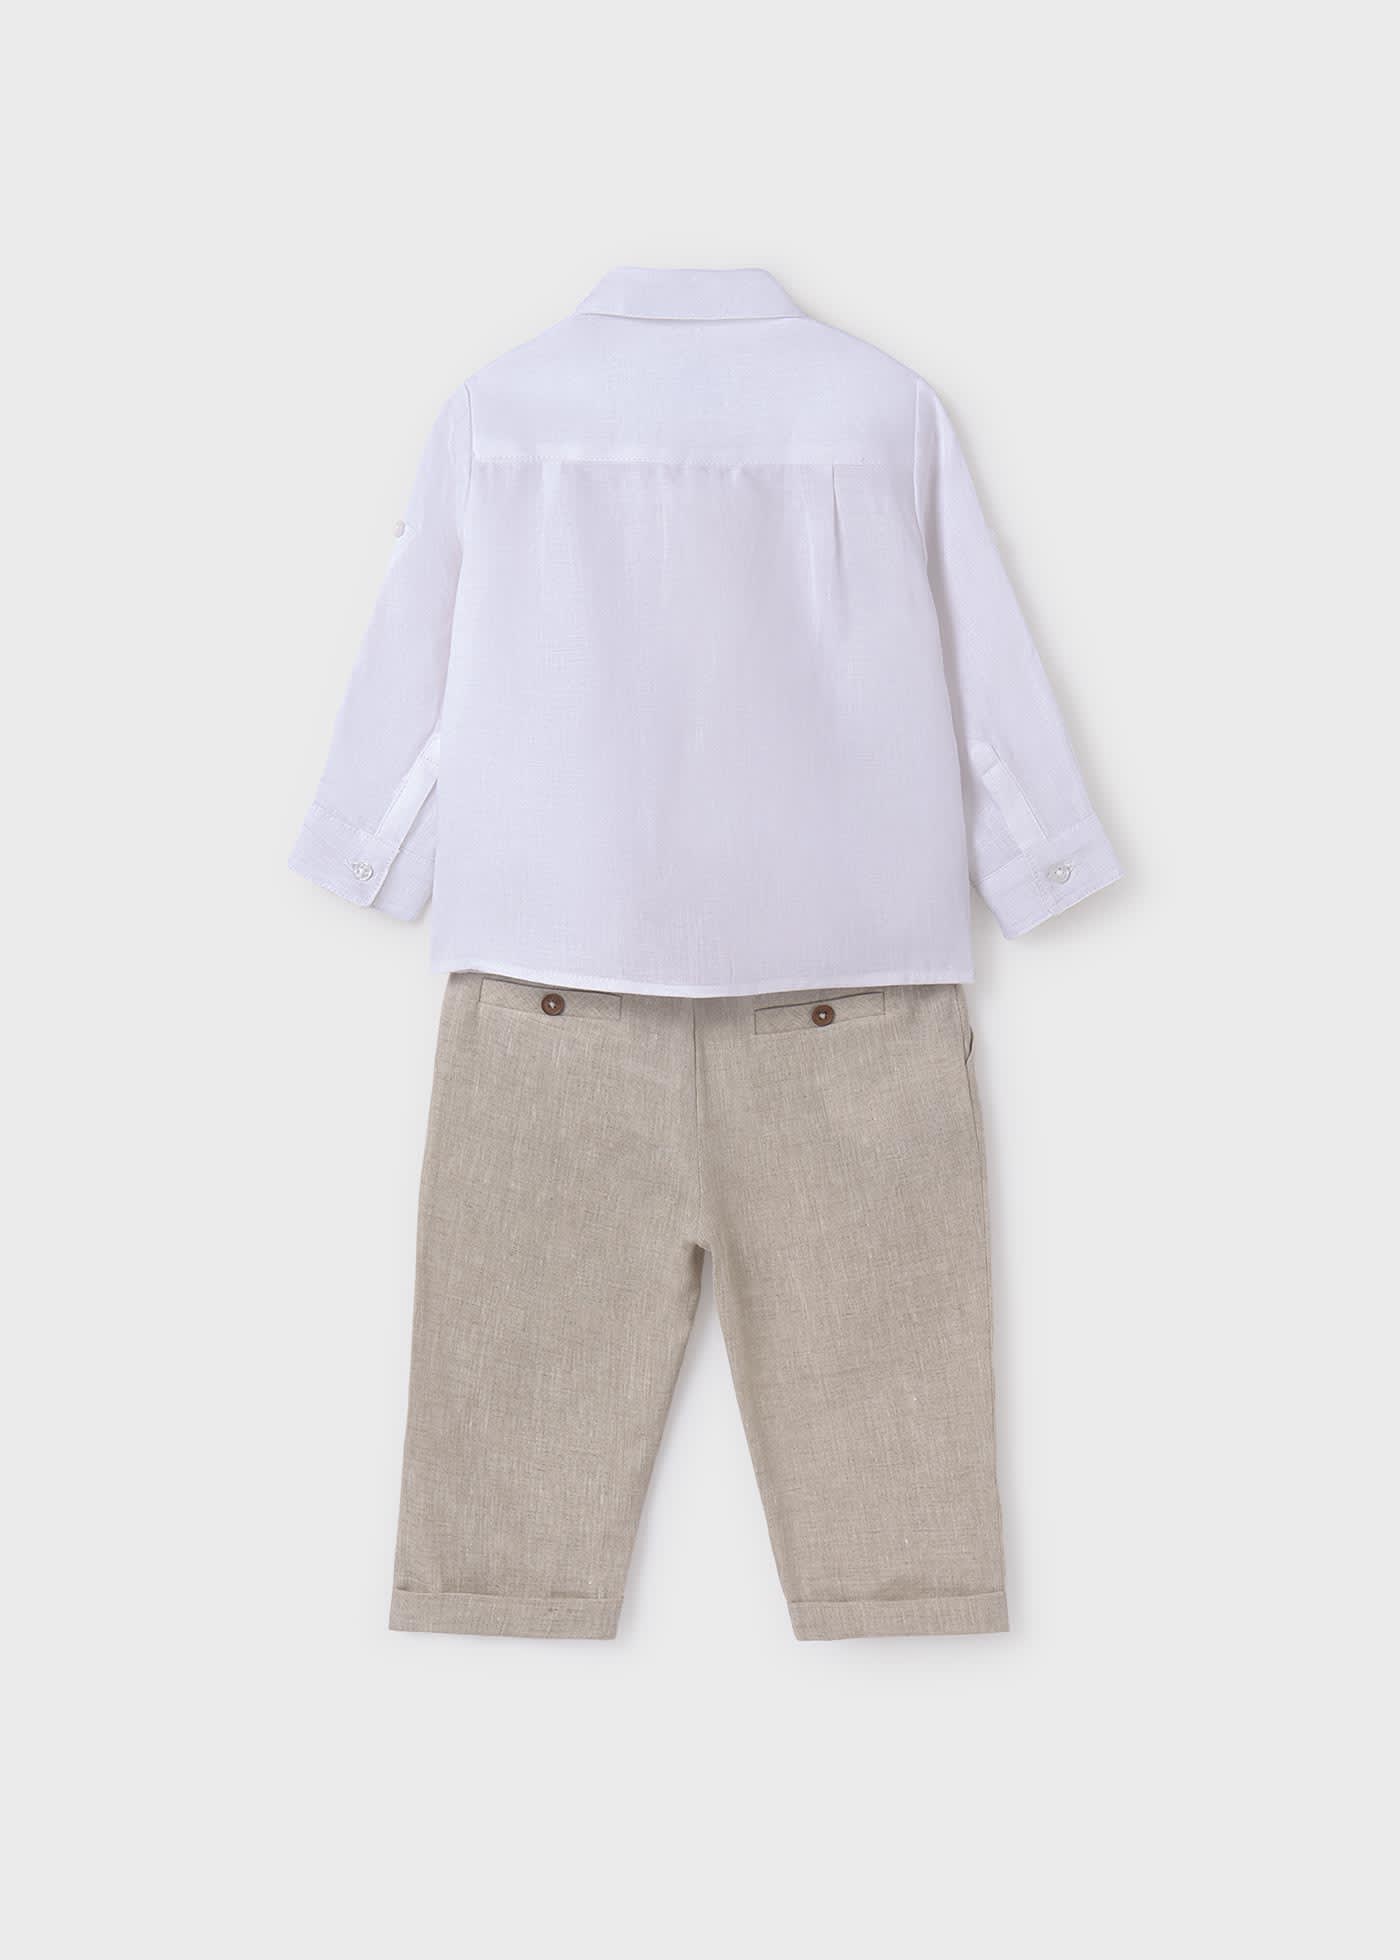 Baby set of pants and shirt